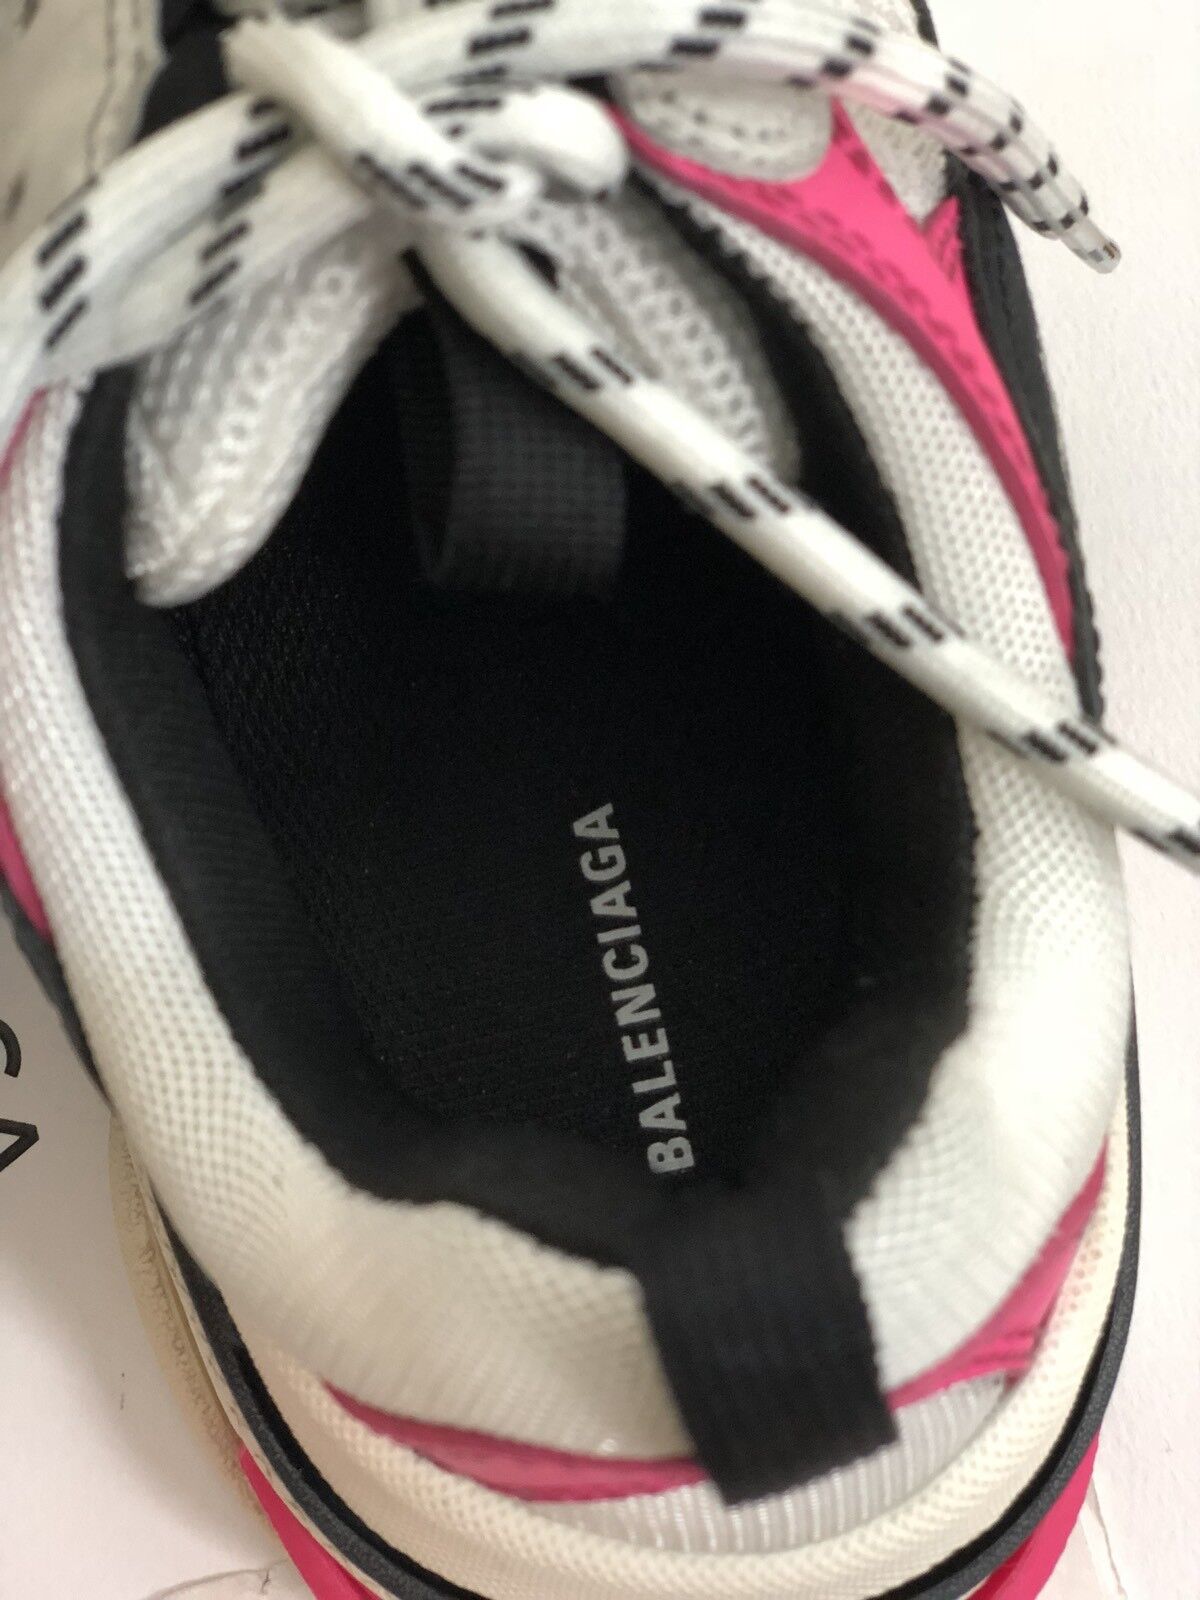 Balenciaga TRIPLE S Women’s Sneaker in Pink/Black sizes 38 & 42